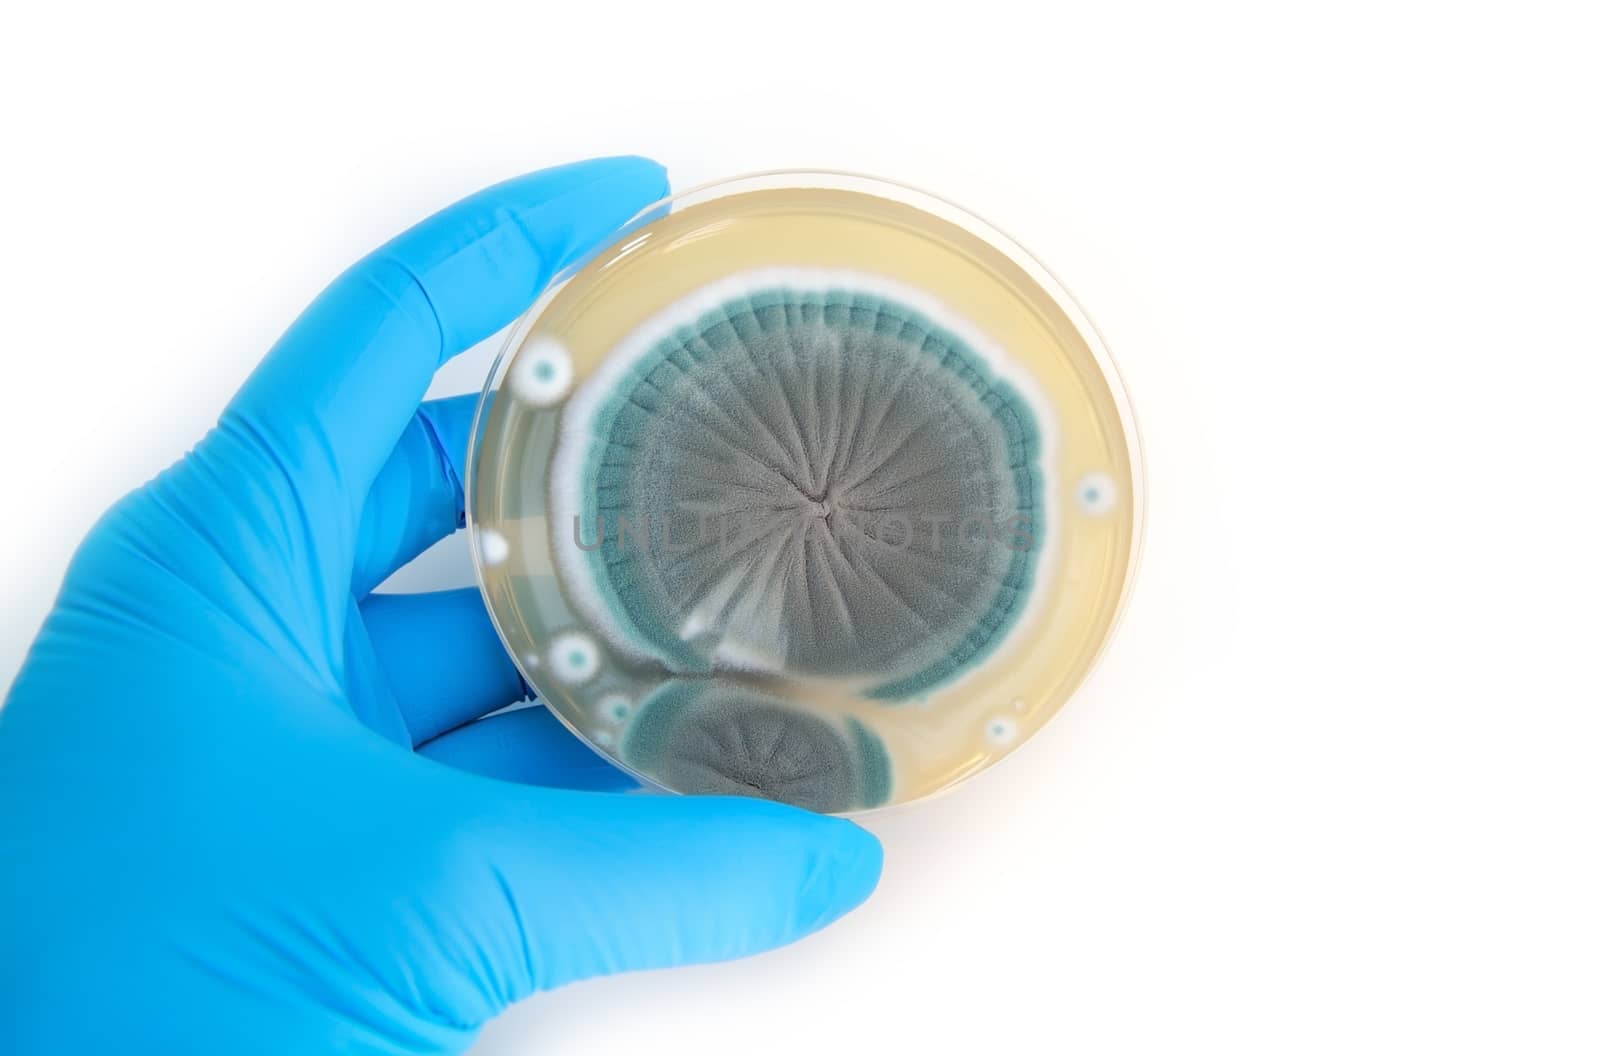 fungi on Petri dish over white by catolla